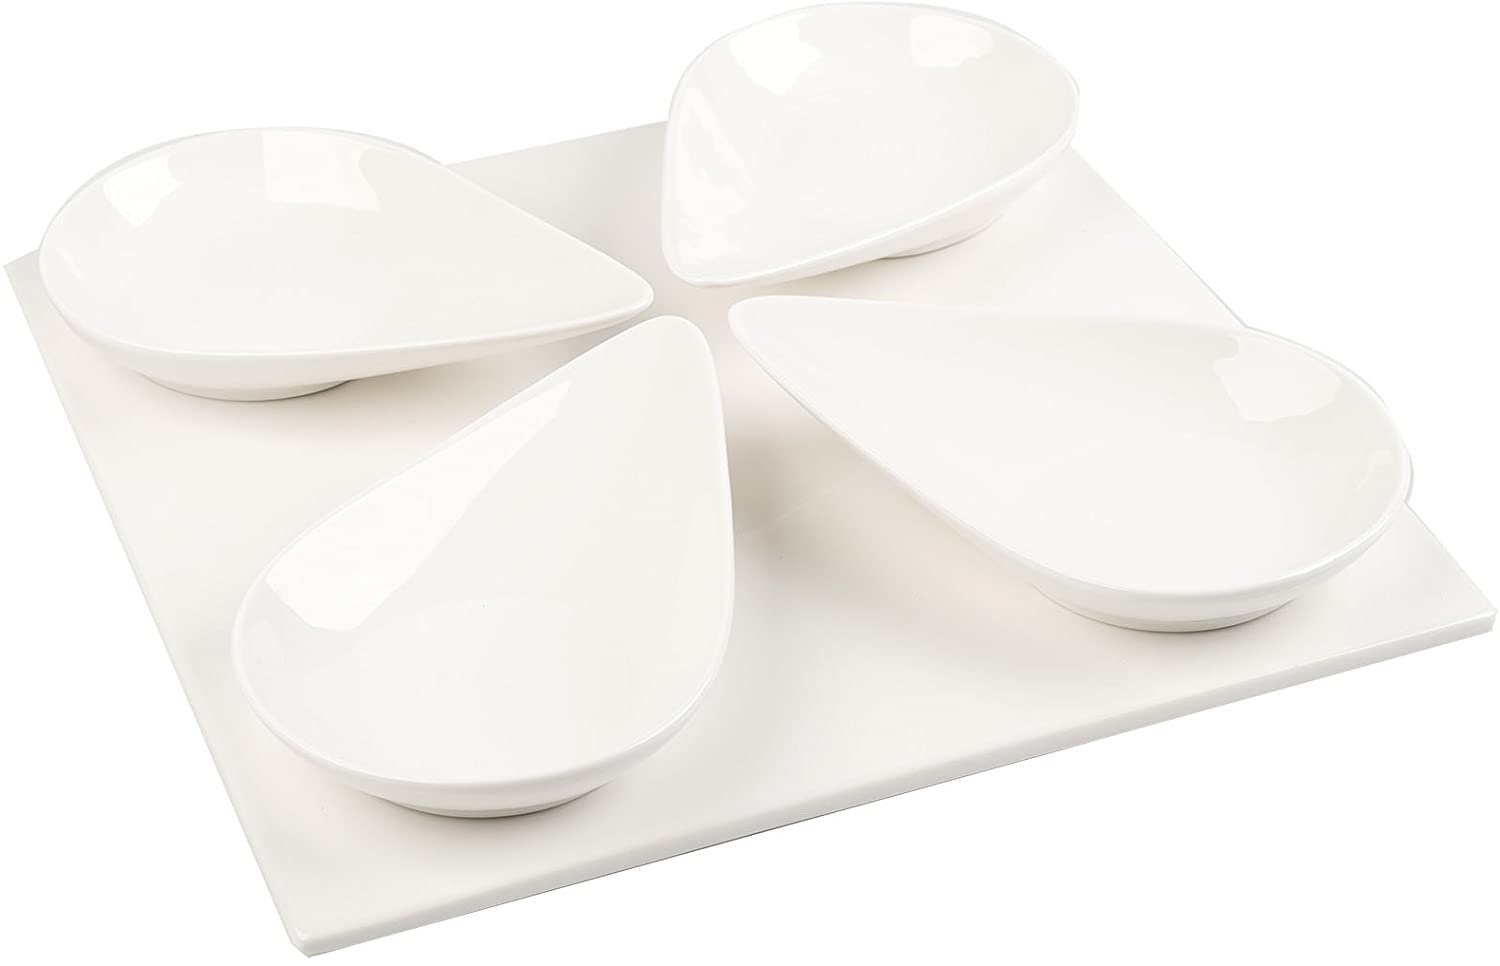 MIKASA, Whiteware Porcelain Spoons and Plates, 30.7 x 30.7 x 1.7 cm, Set of 4